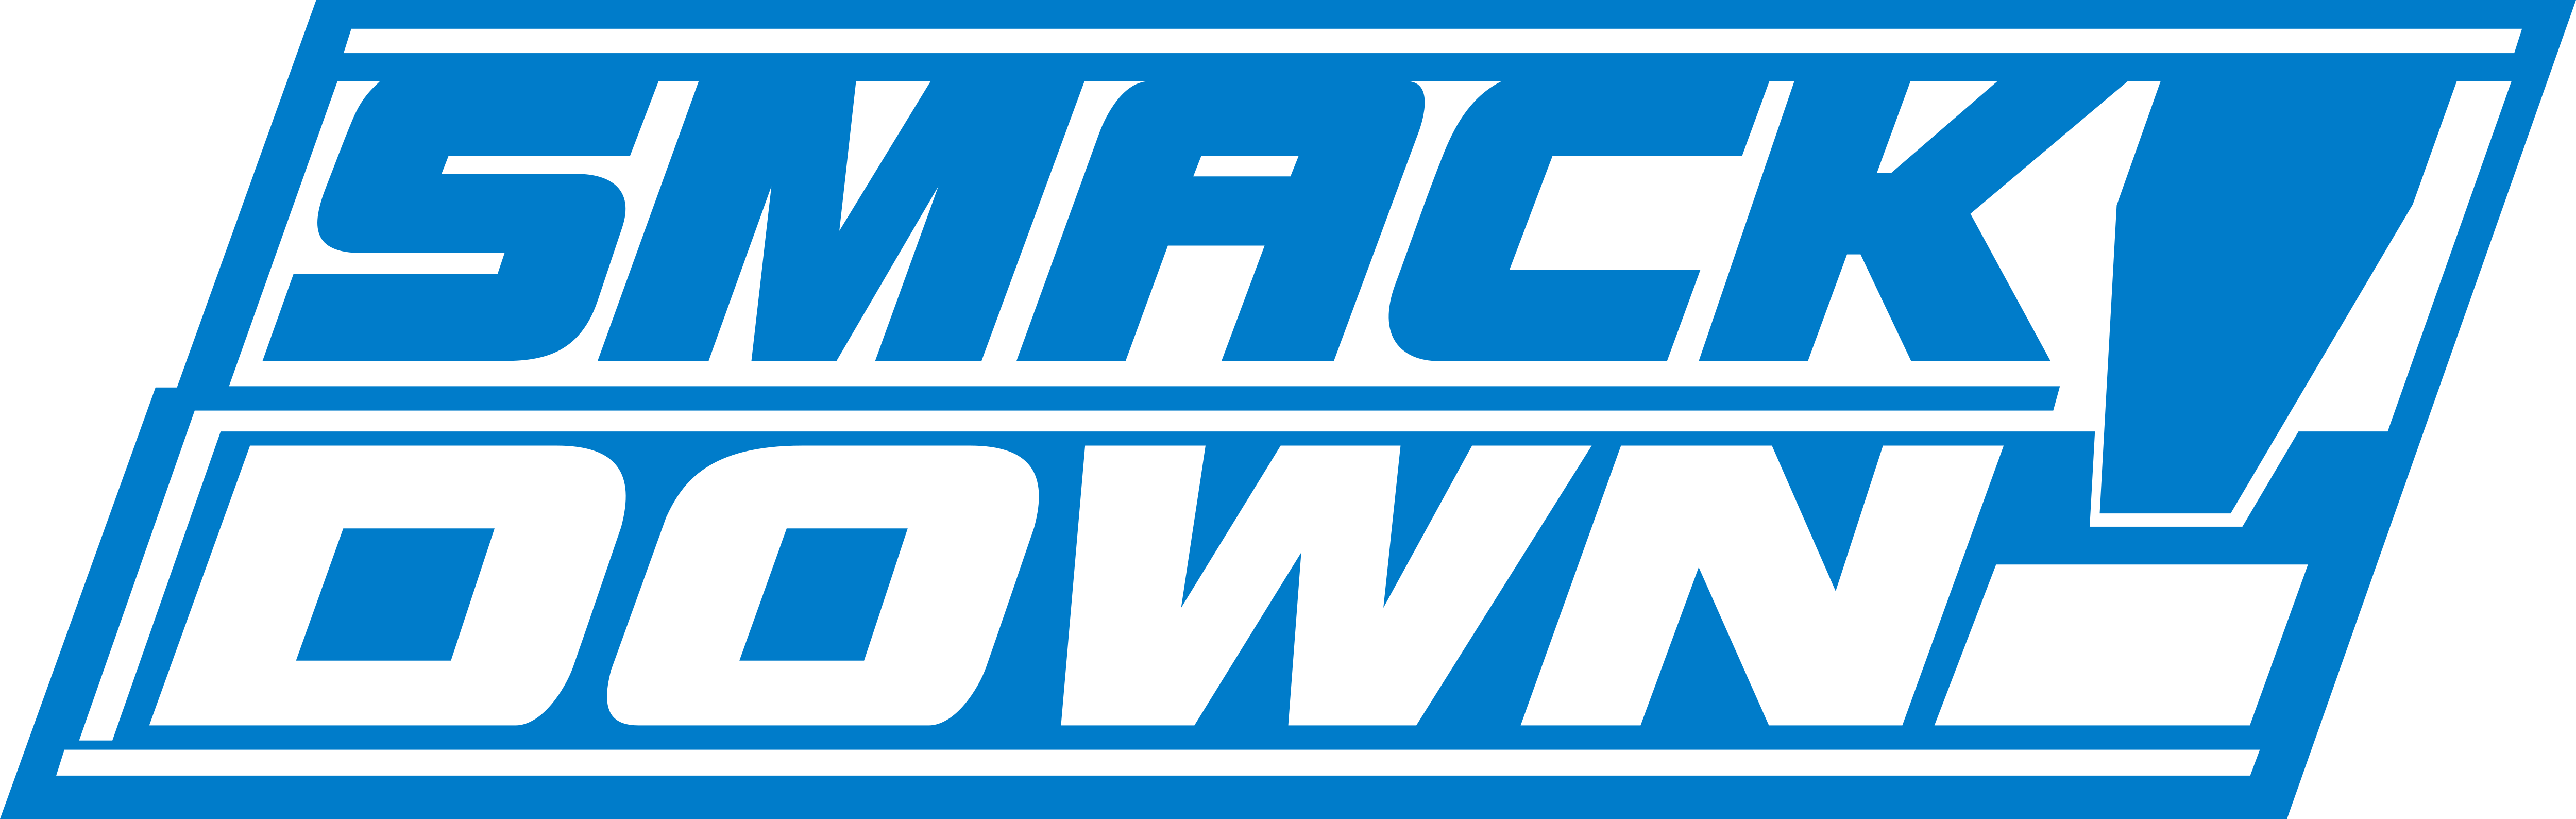 Wwe Smackdown 01 08 Logo By Darkvoidpictures On Deviantart